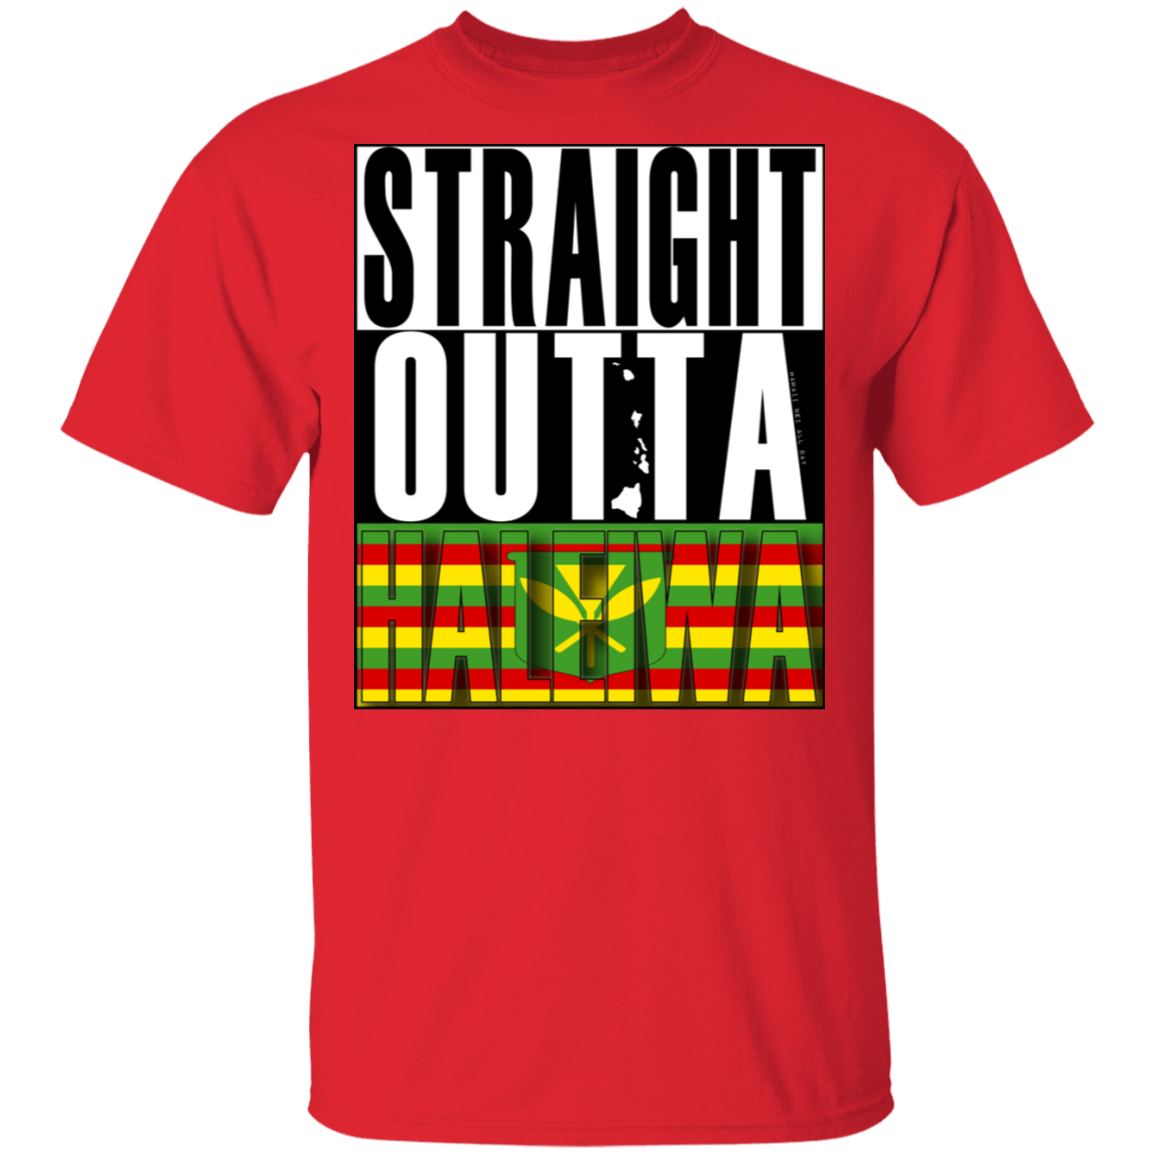 Straight Outta Haleiwa(Kanaka Maoli) T-Shirt, T-Shirts, Hawaii Nei All Day